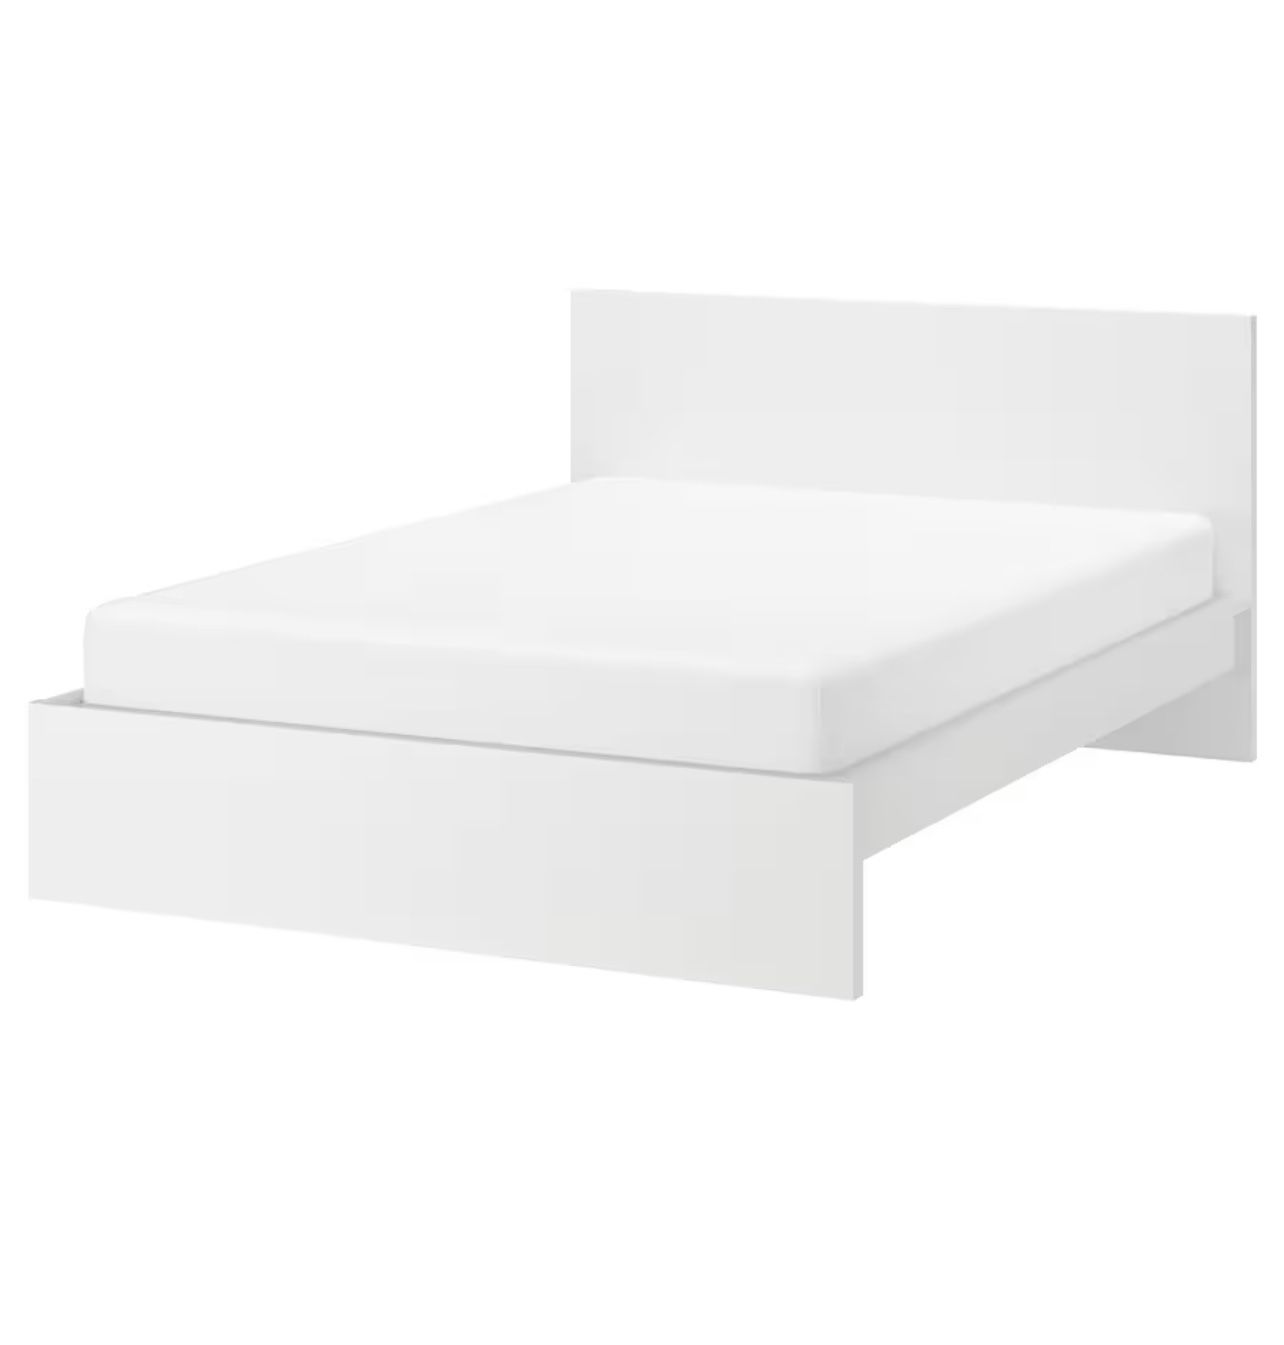 IKEA Bed Frame W/ 2 Storage Boxes